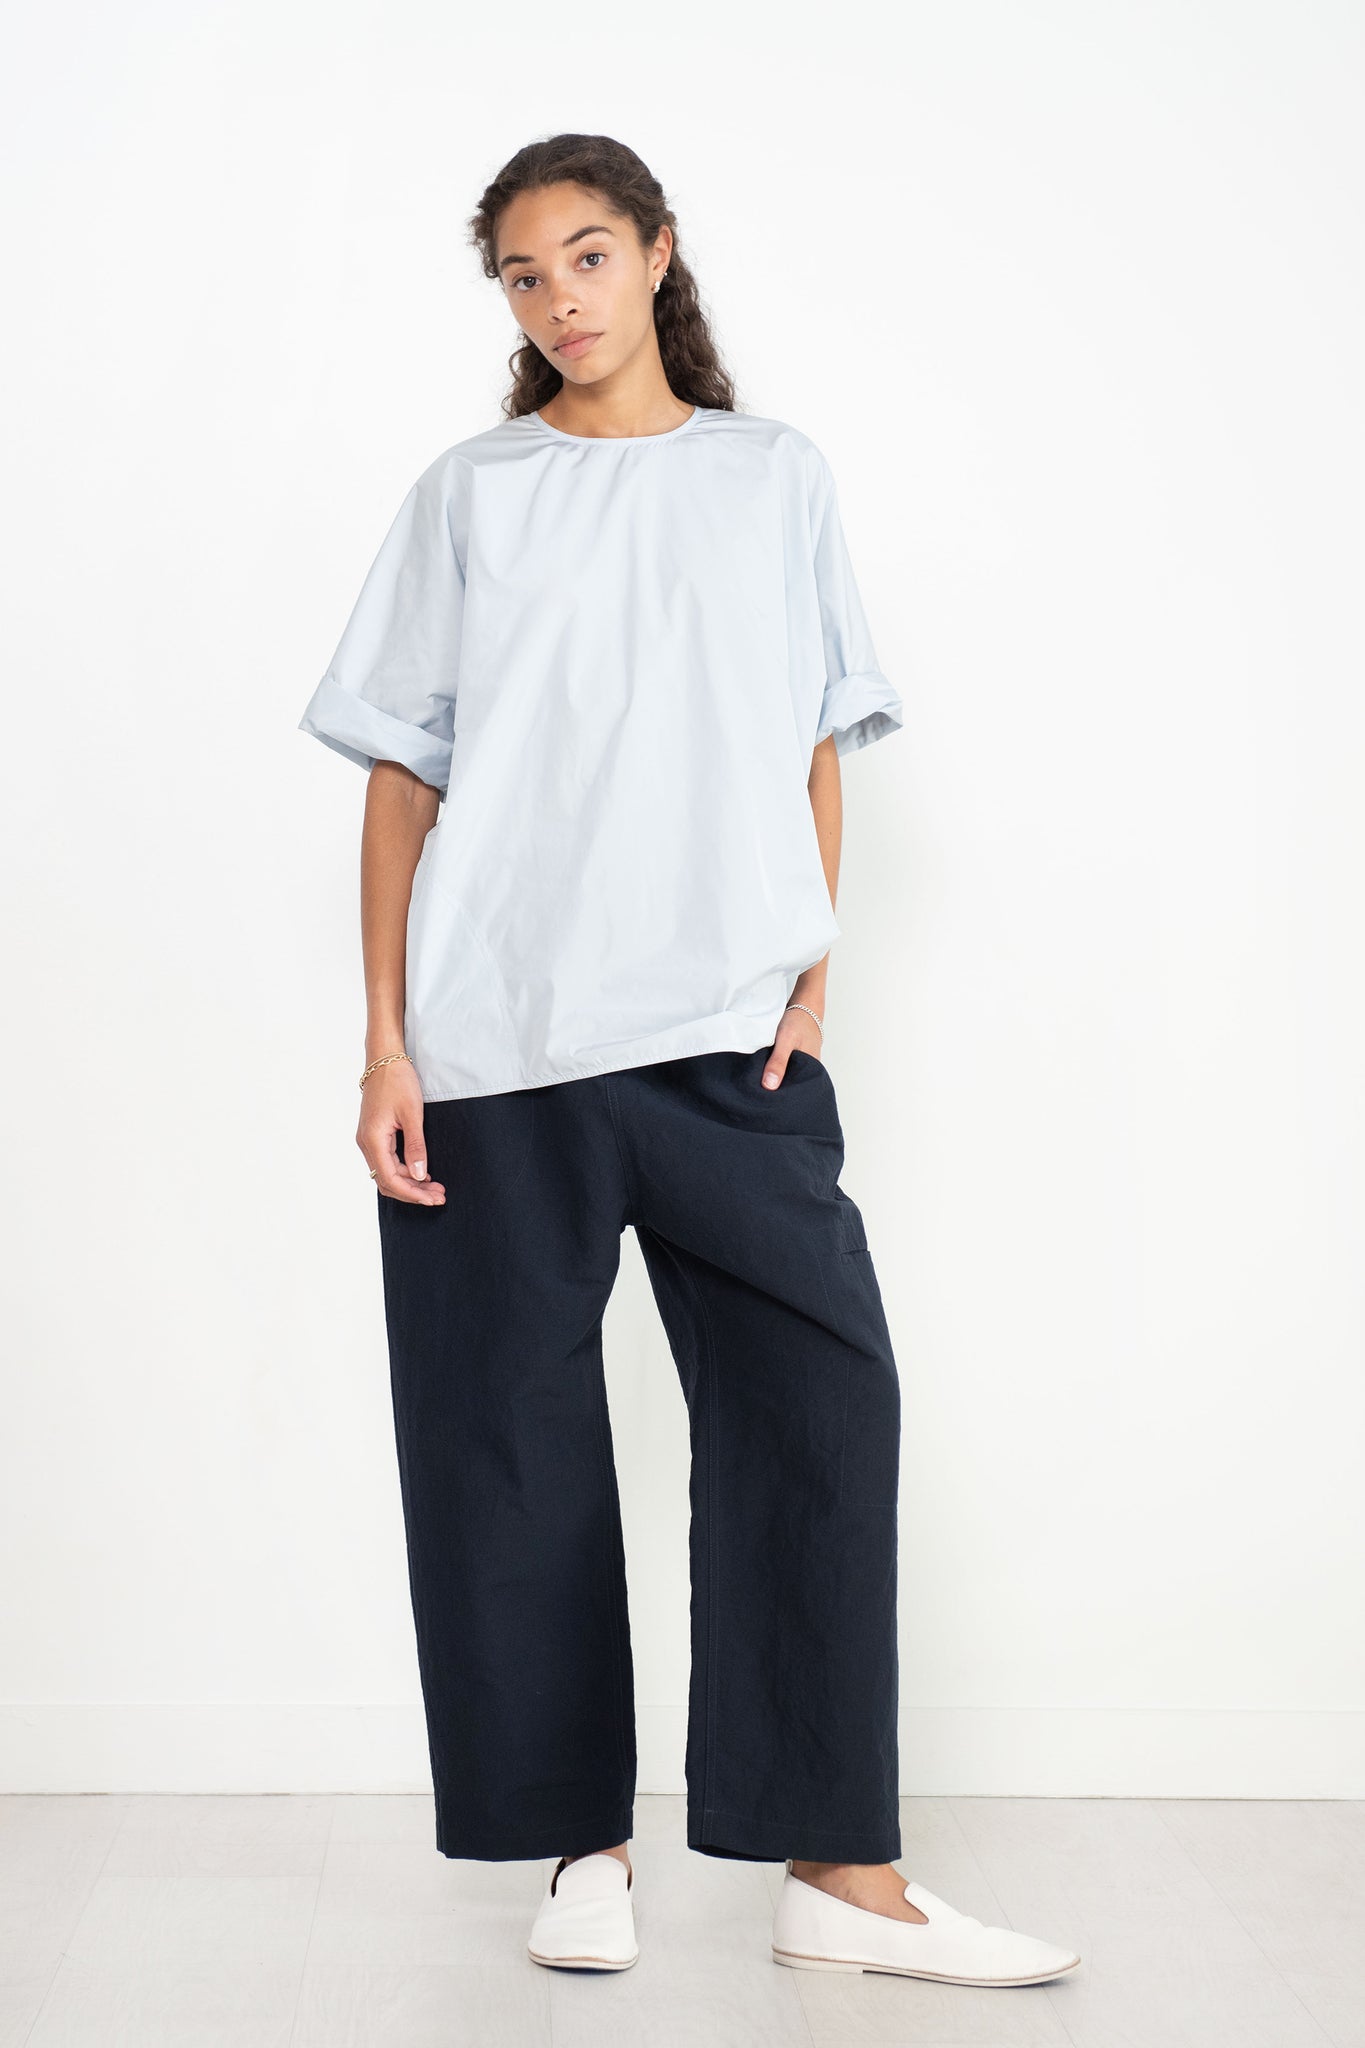 Sofie D'Hoore - Pluck Linen Cotton Trouser, Navy